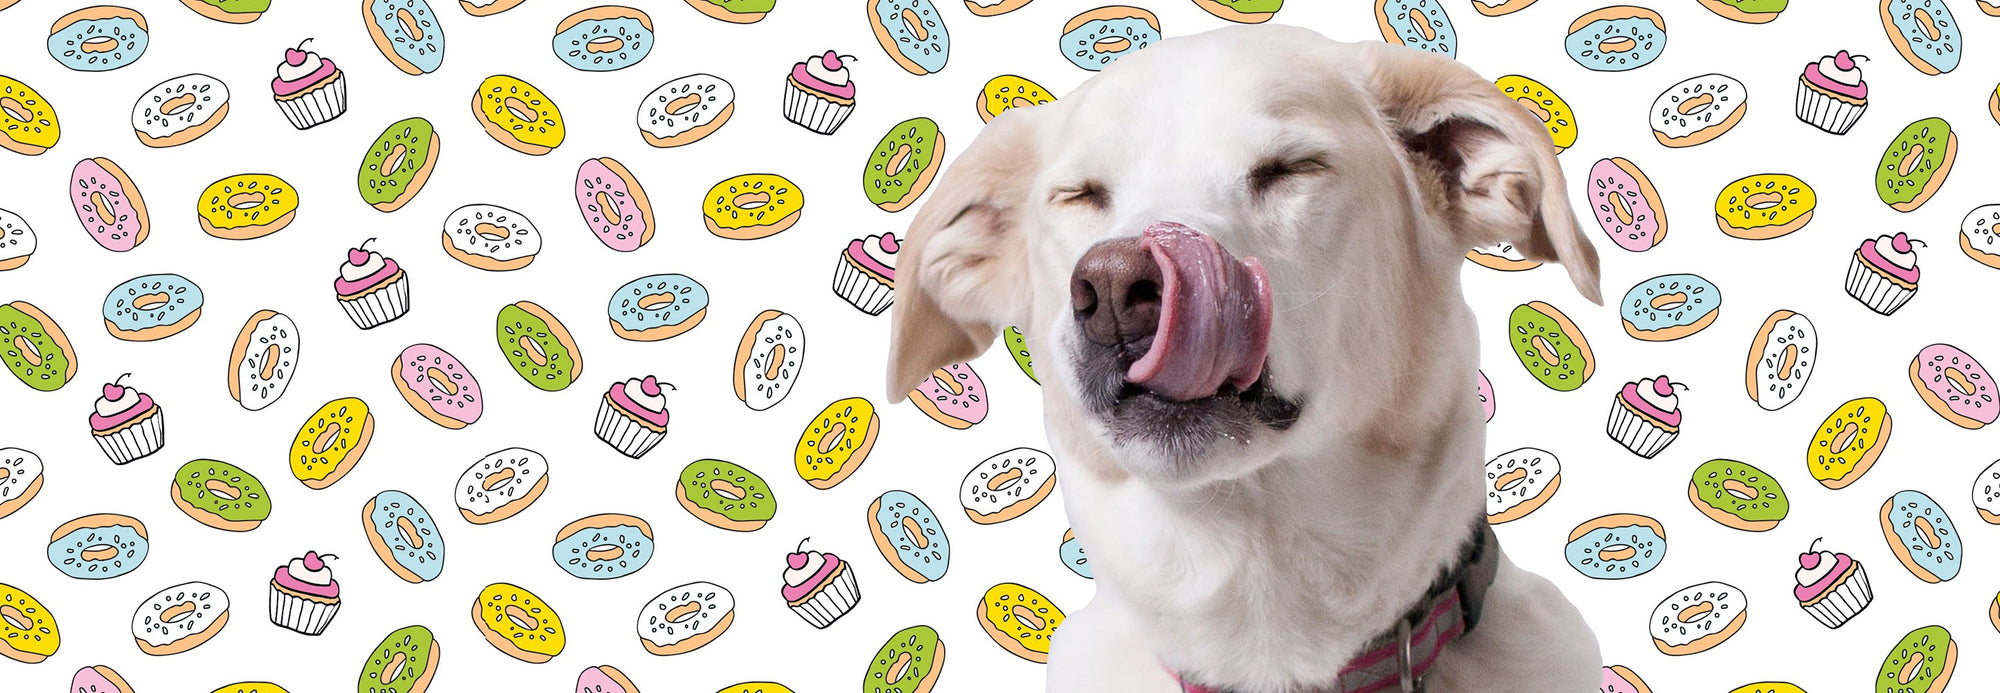 How to Make Dog Cupcakes: Dog Pupcake & Donut Recipes